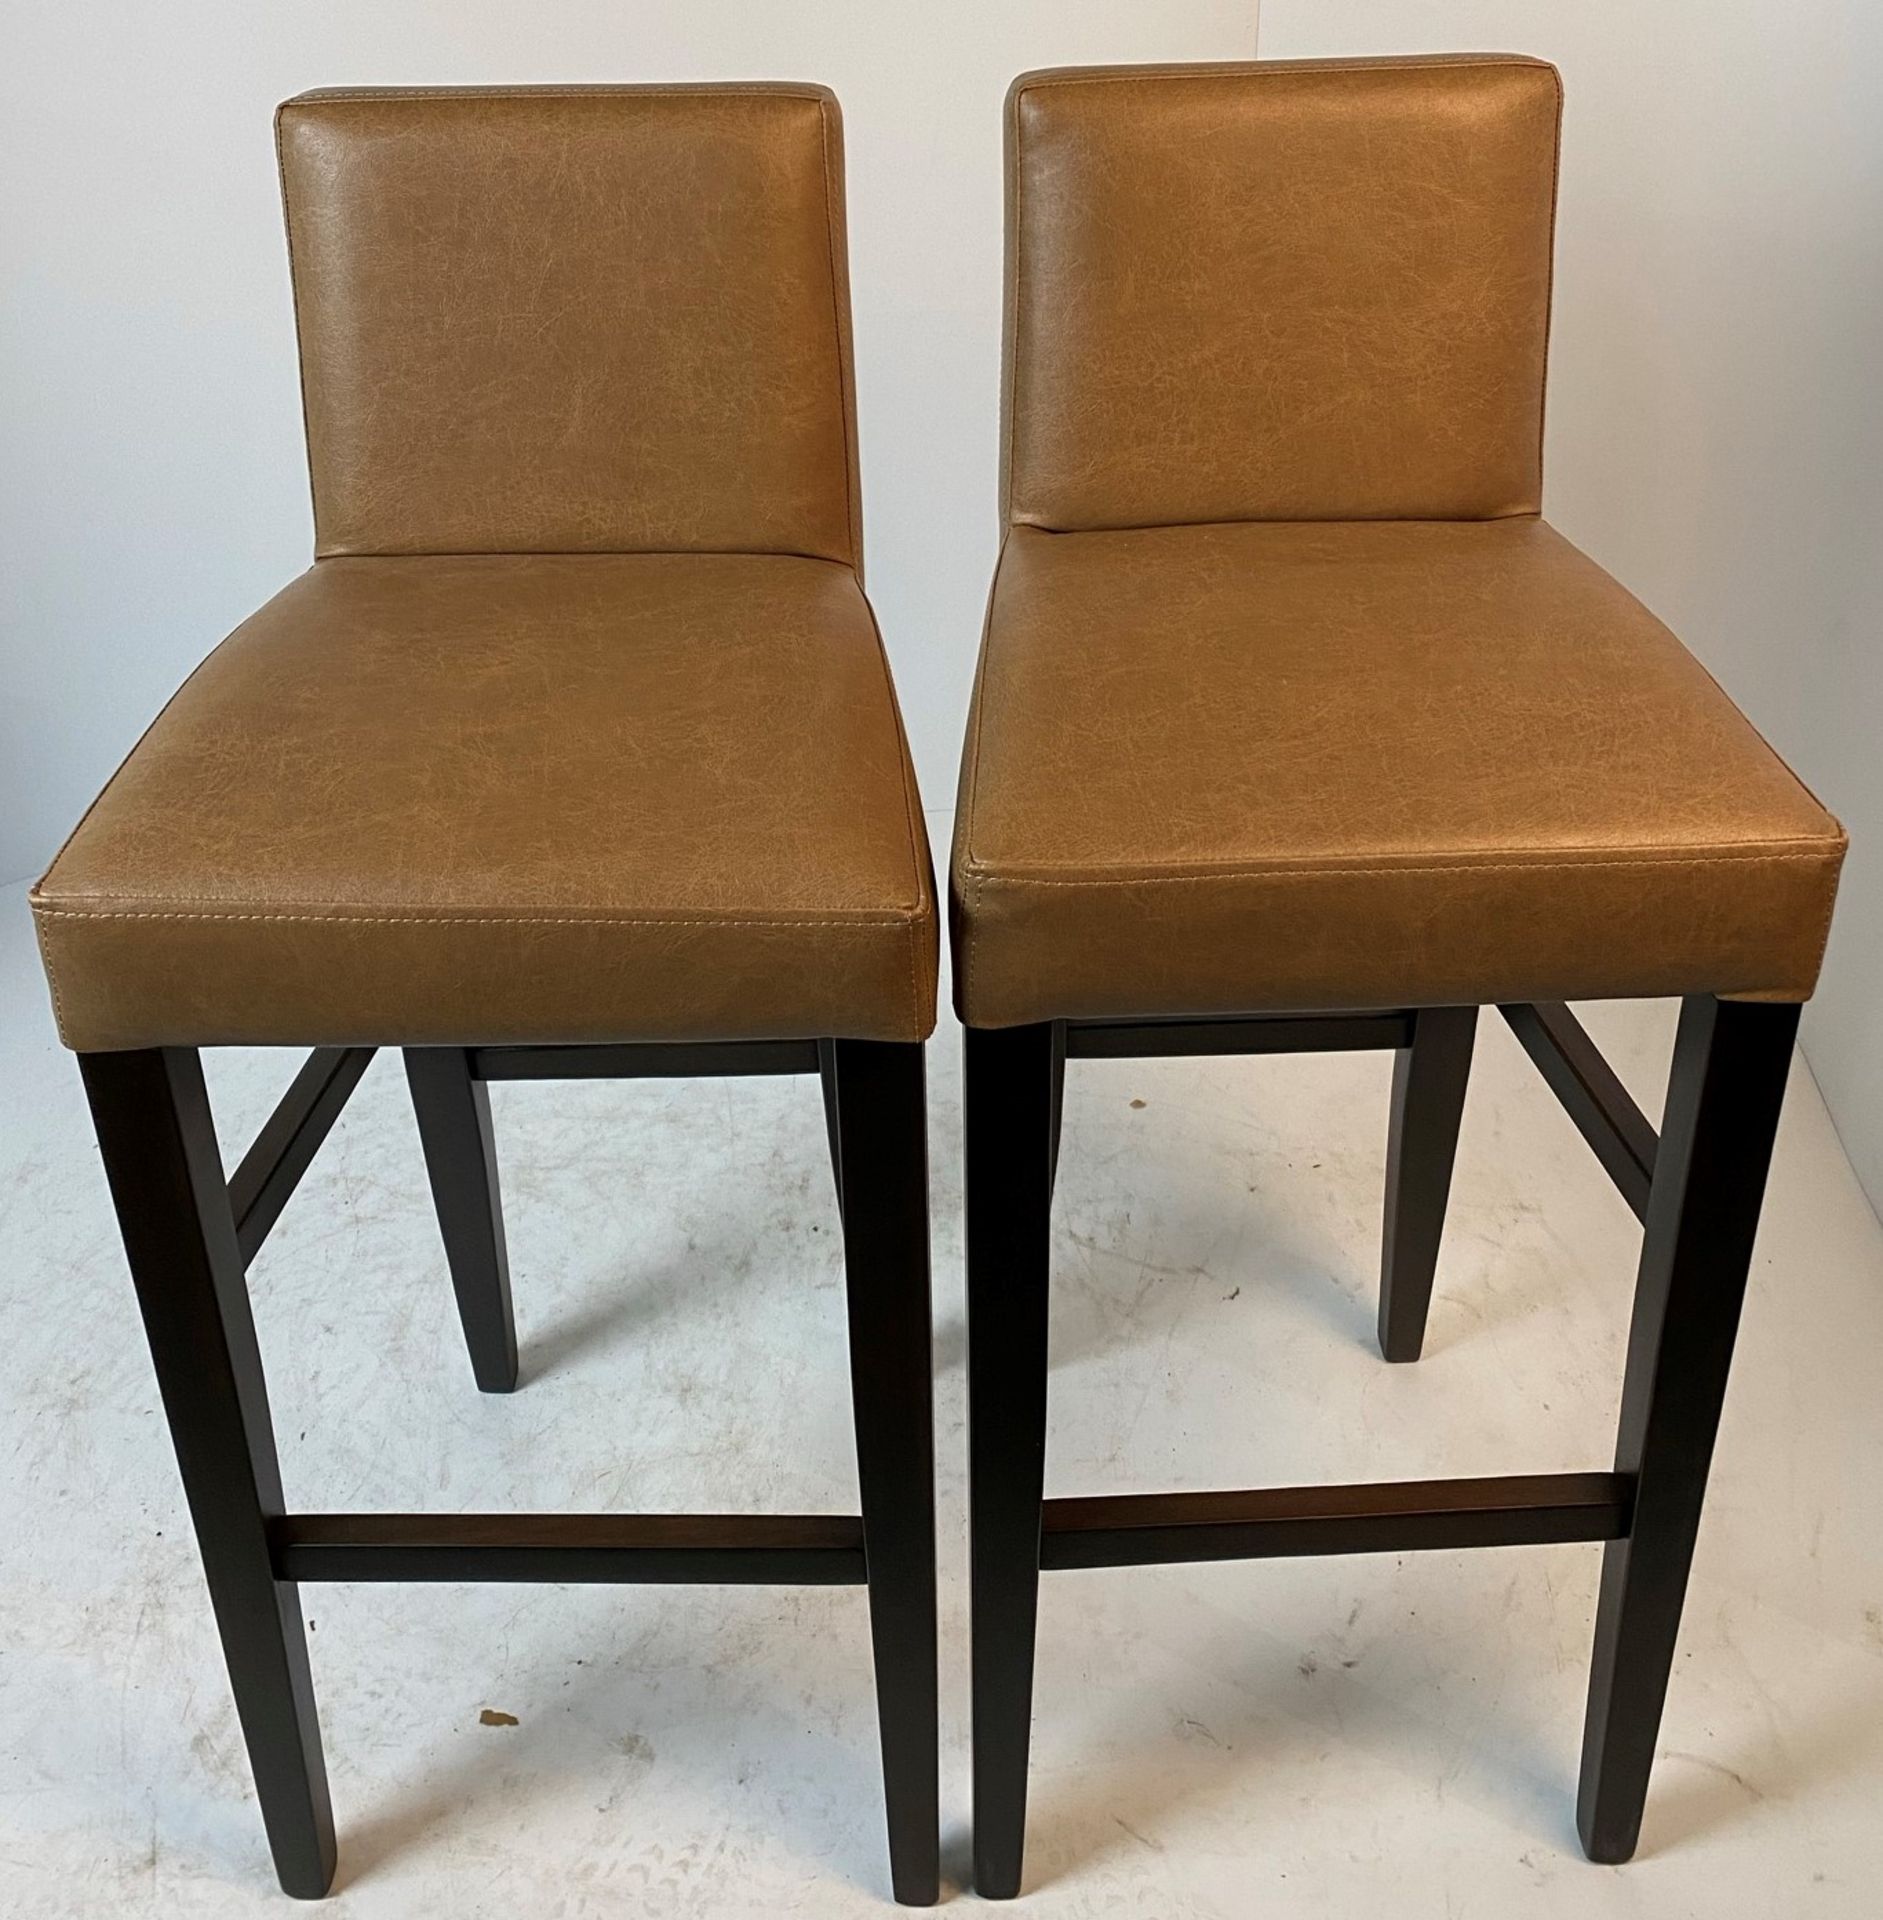 2 x Mini Valencia ILIV Saddle Toffee high stools with dark walnut coloured frames